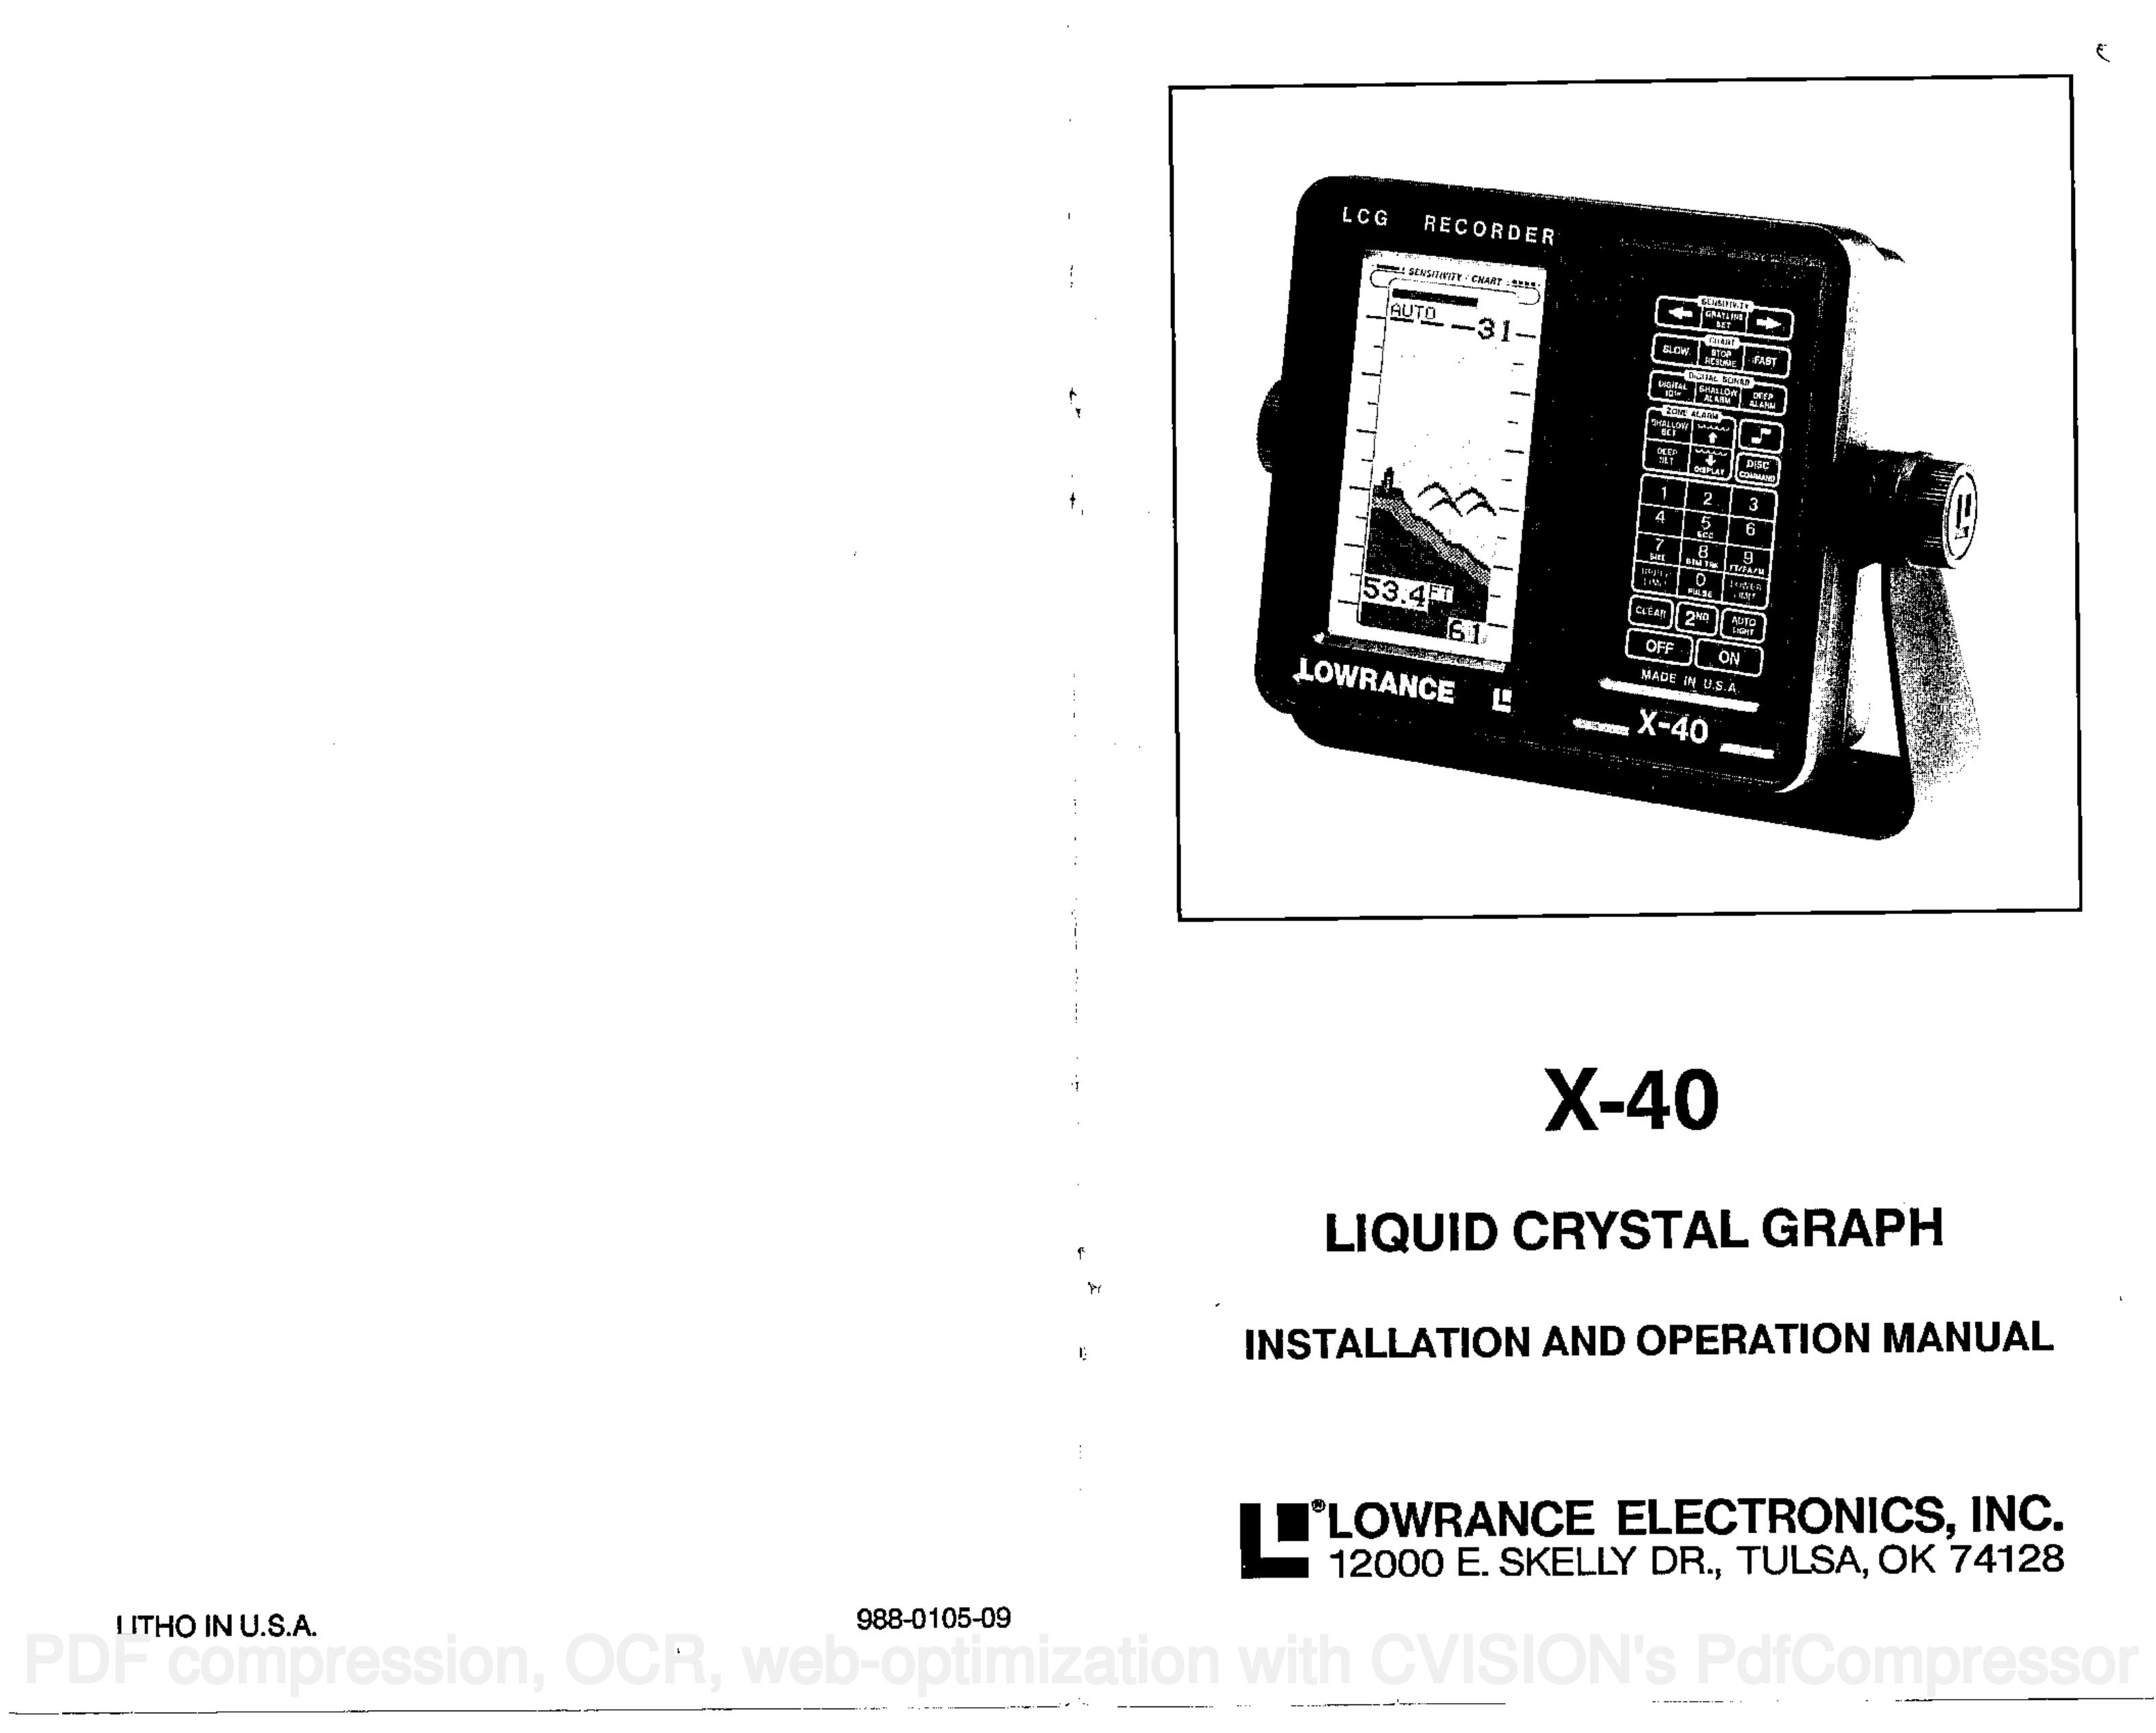 Lowrance electronic X-40 SONAR User Manual